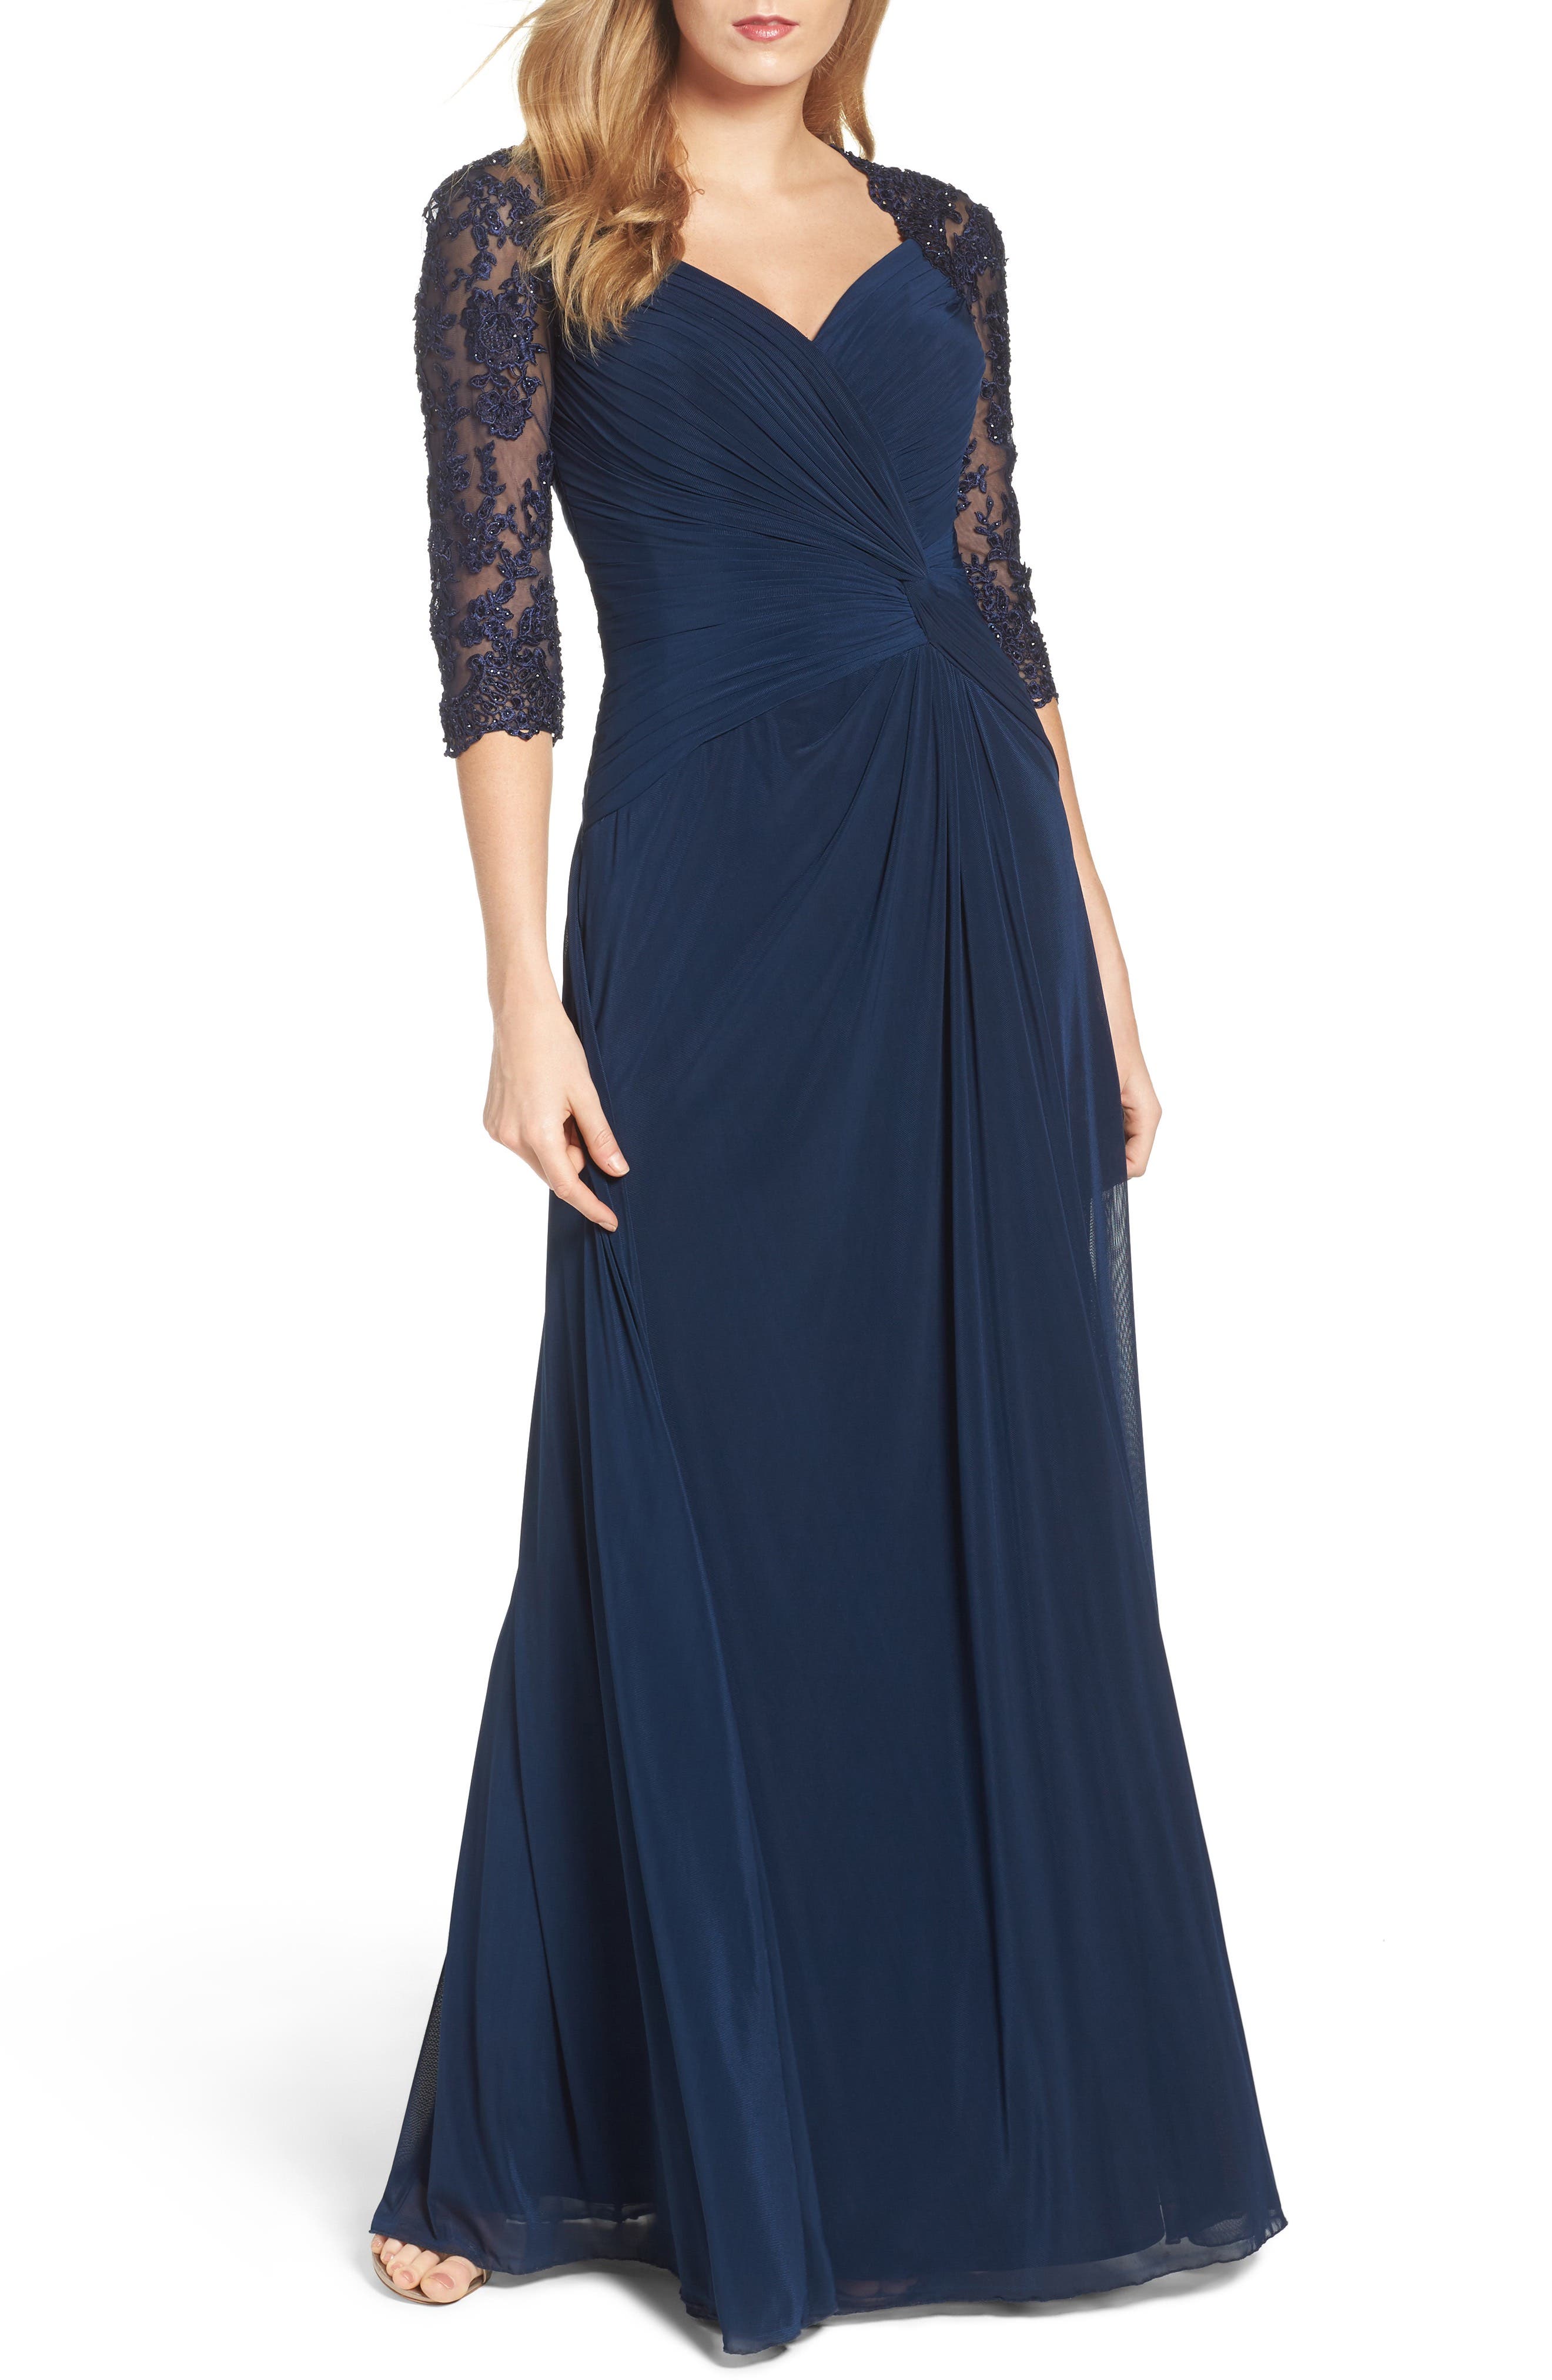 Women's Blue Formal Dresses ☀ Evening ...